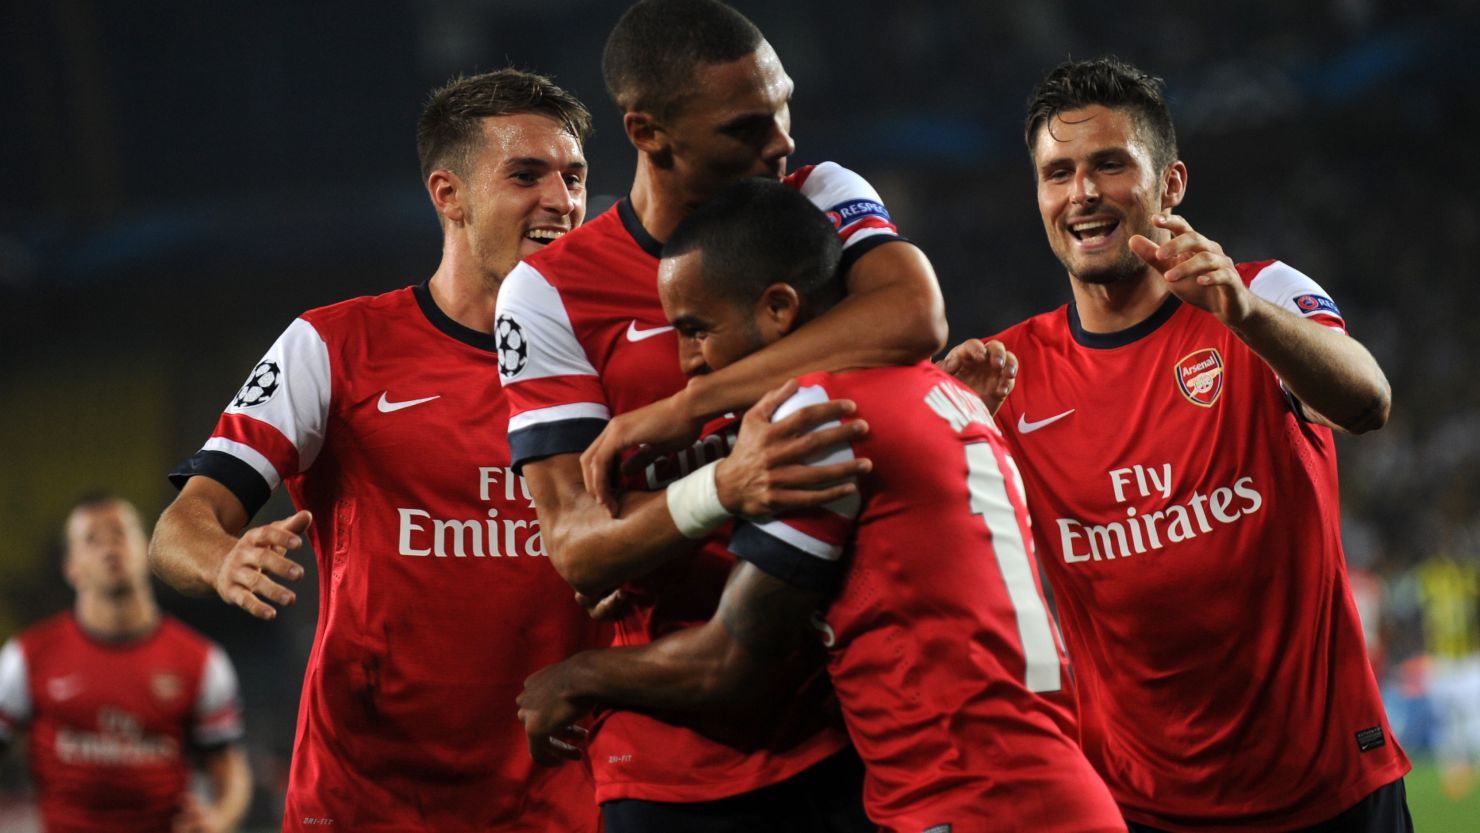 Kieran Gibbs (center left) is mobbed after scoring Arsenal's opening goal in Turkey.